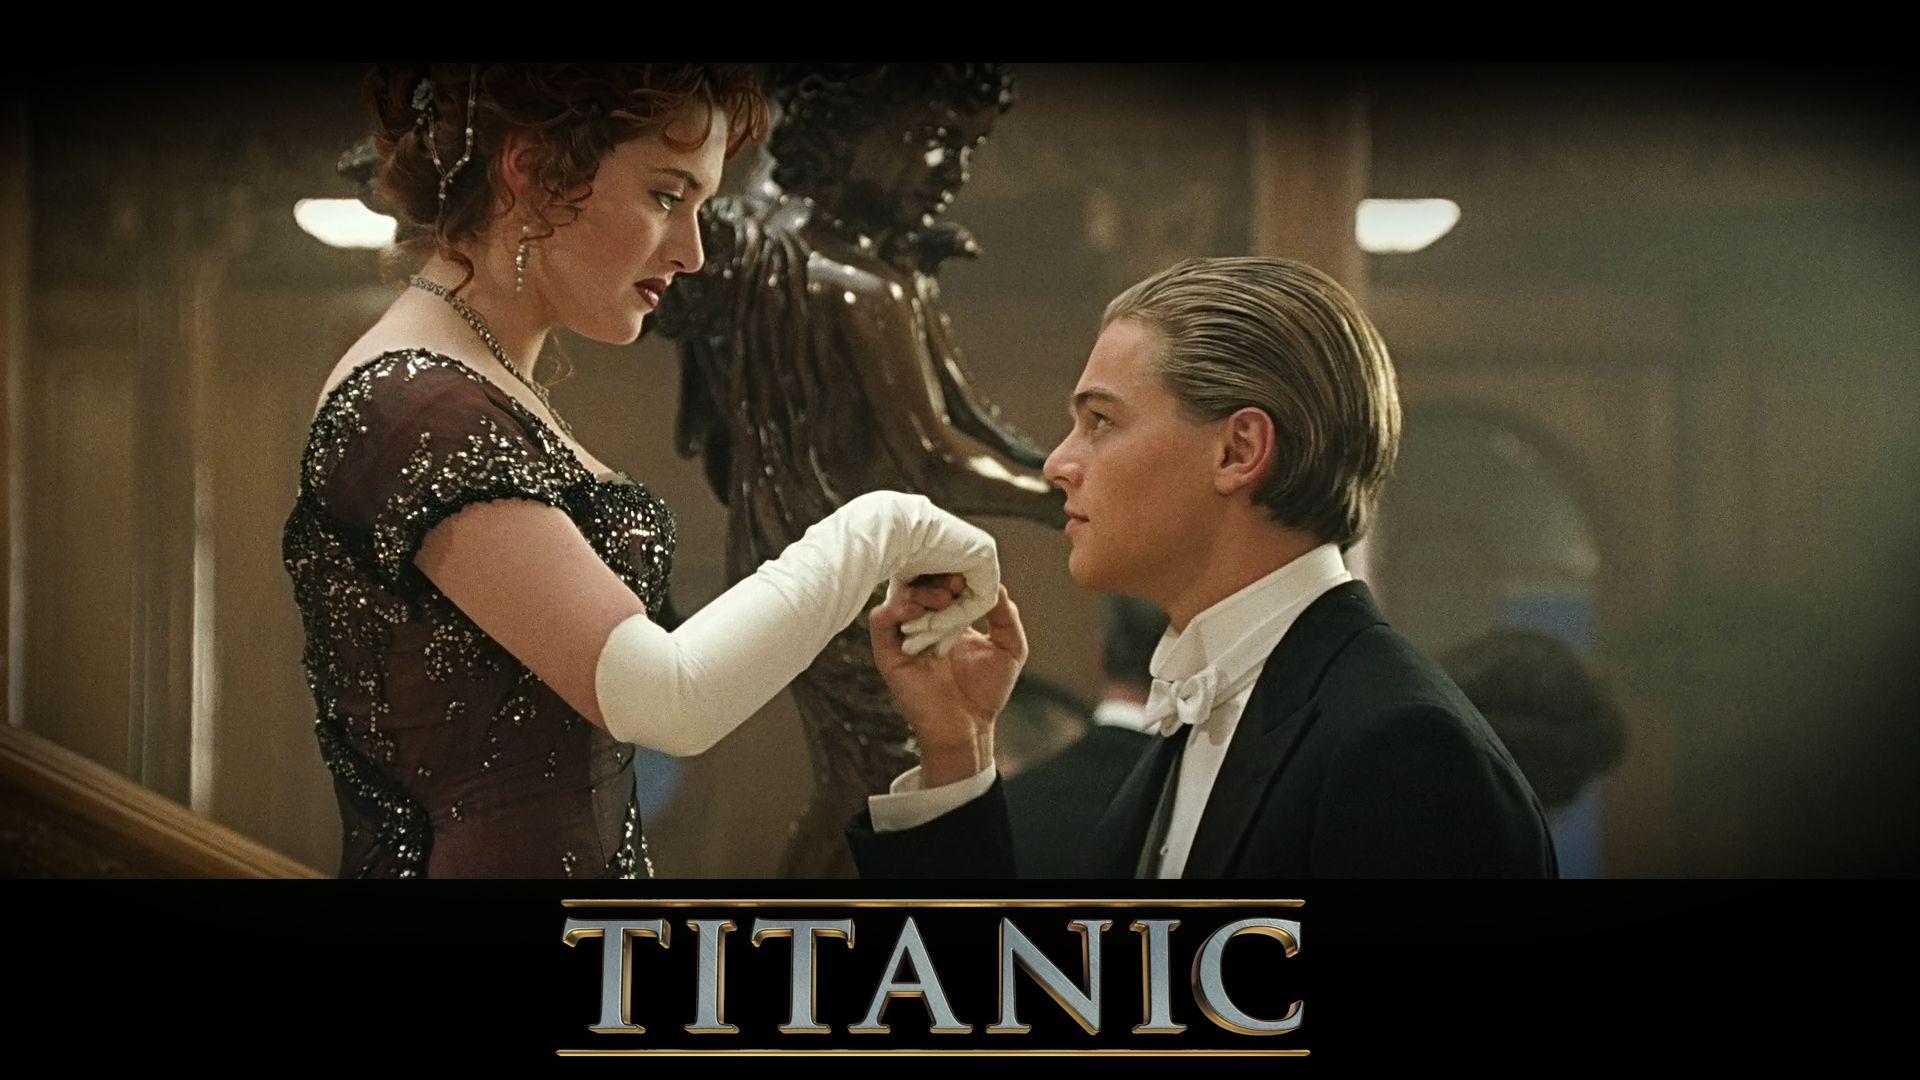 Titanic Movie Wallpaper.com HD Background Wallpaper 16 HD